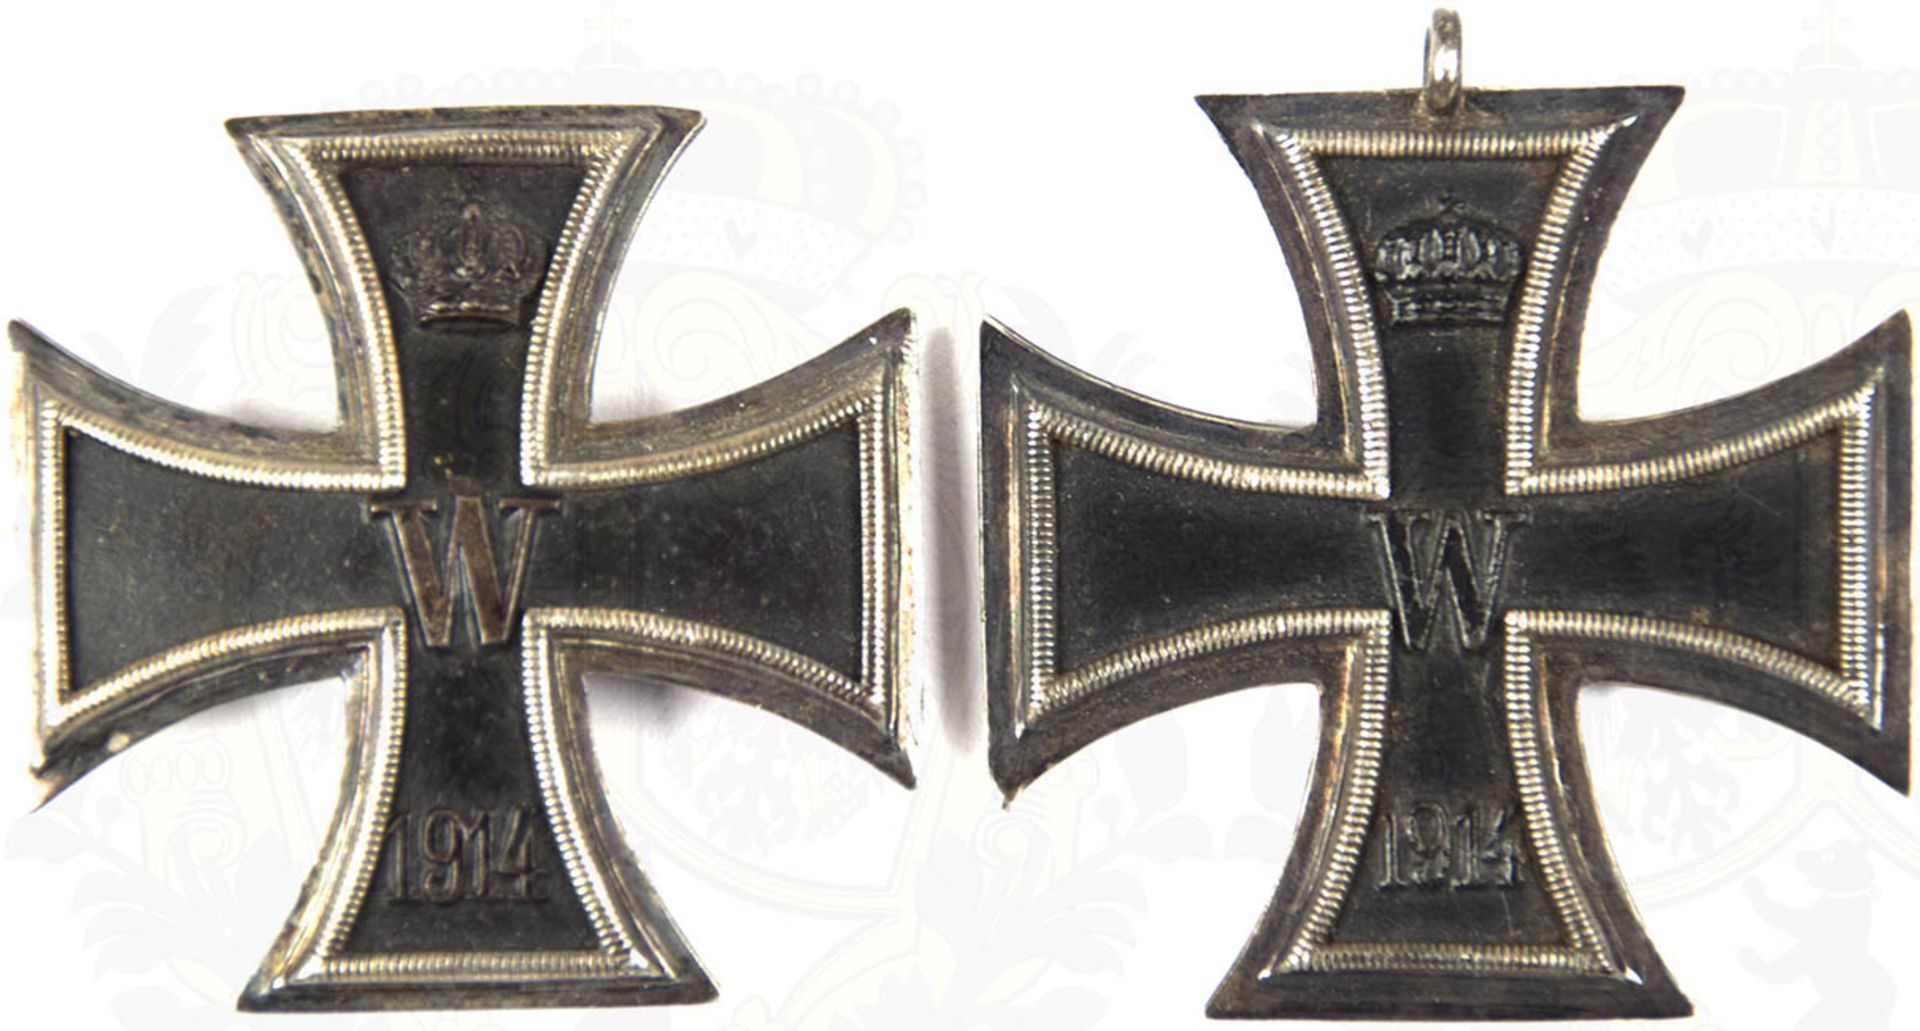 EK I 1914, Eisenkern/Silber, Nadel punziert "800", leicht gewölbt; dazu EK II 1914, Eisenkern/